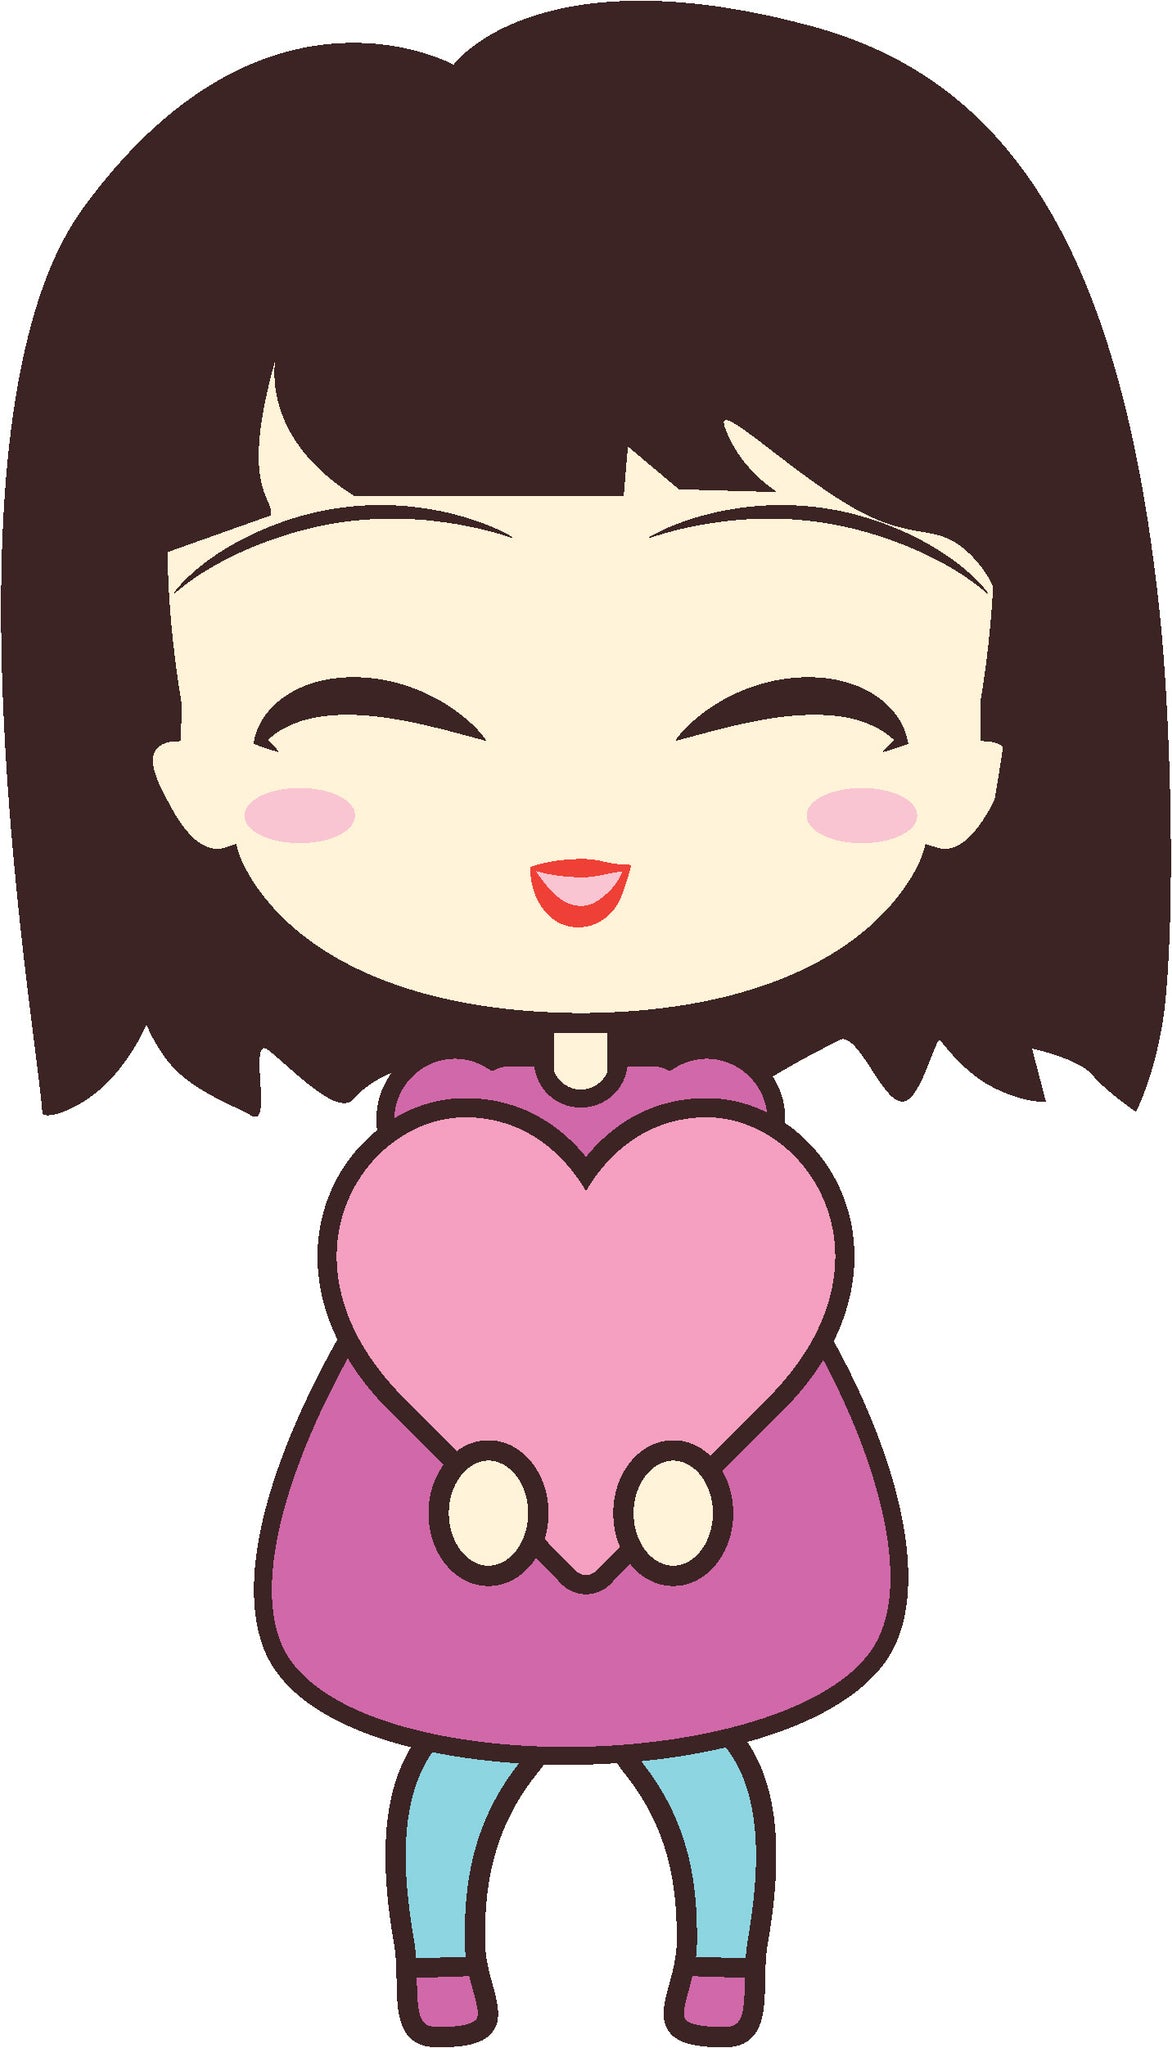 Adorable Cute Japanese Kawaii Girl Cartoon Emoji #1 Vinyl Decal Sticke ...